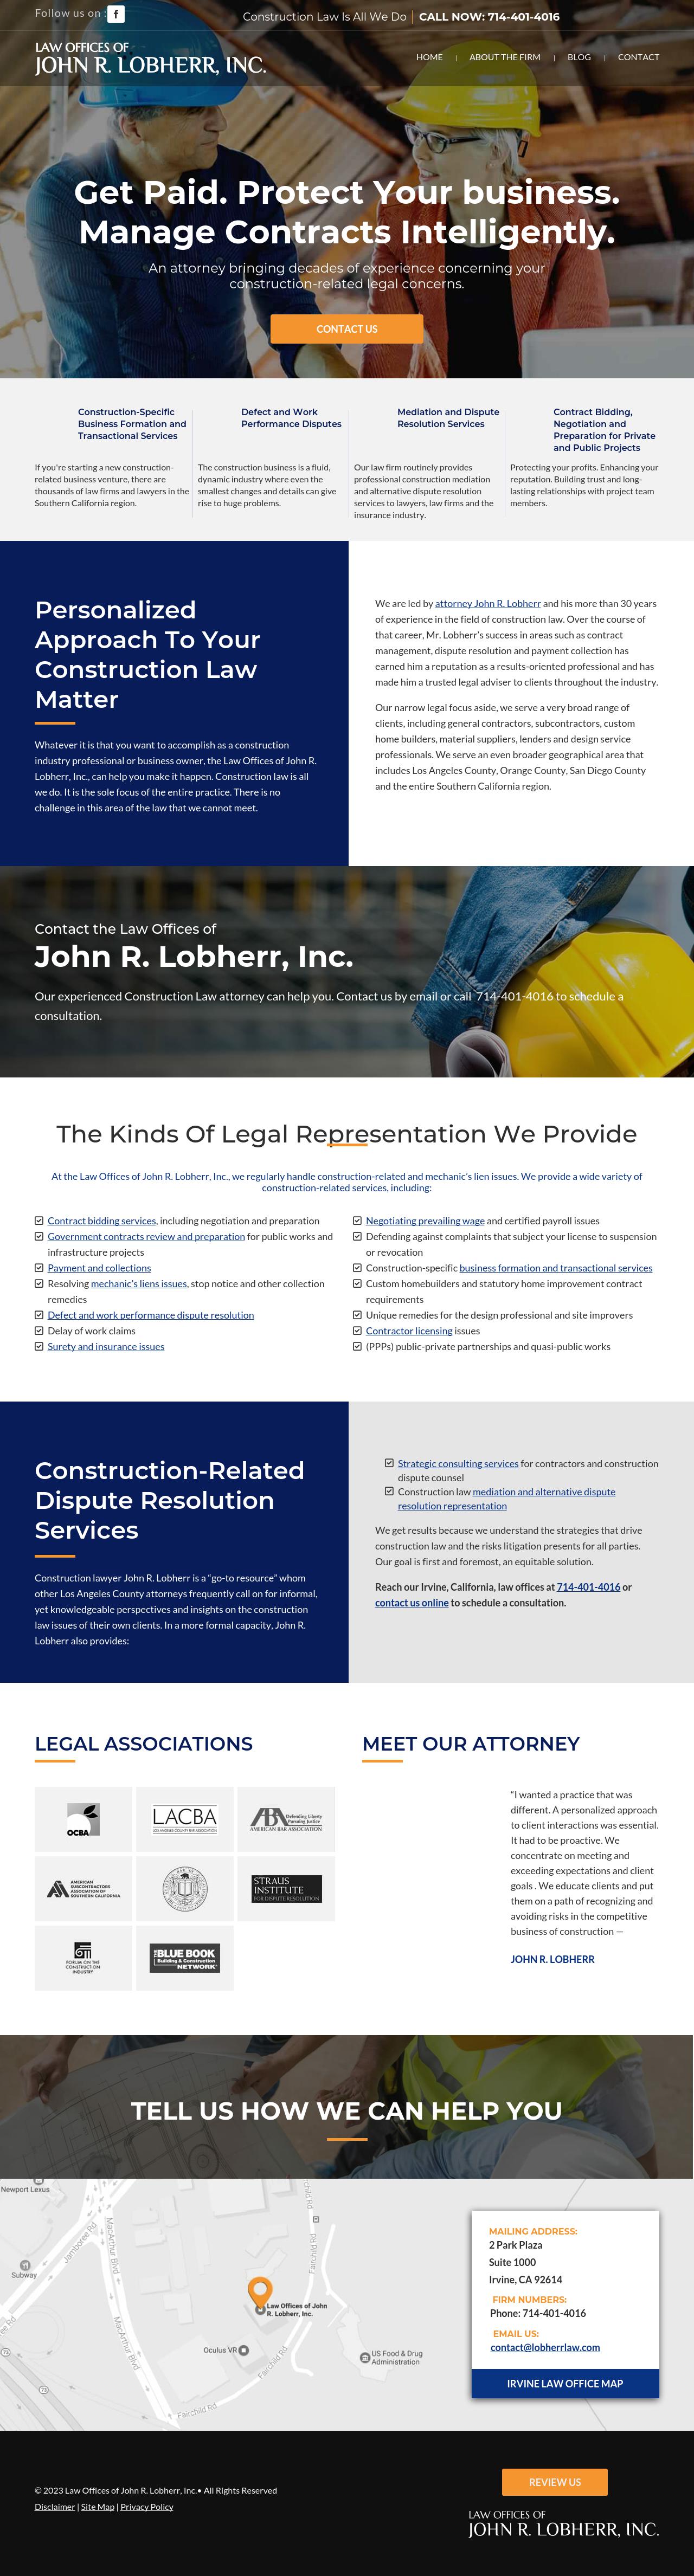 Law Offices of John R. Lobherr, Inc. - Irvine CA Lawyers